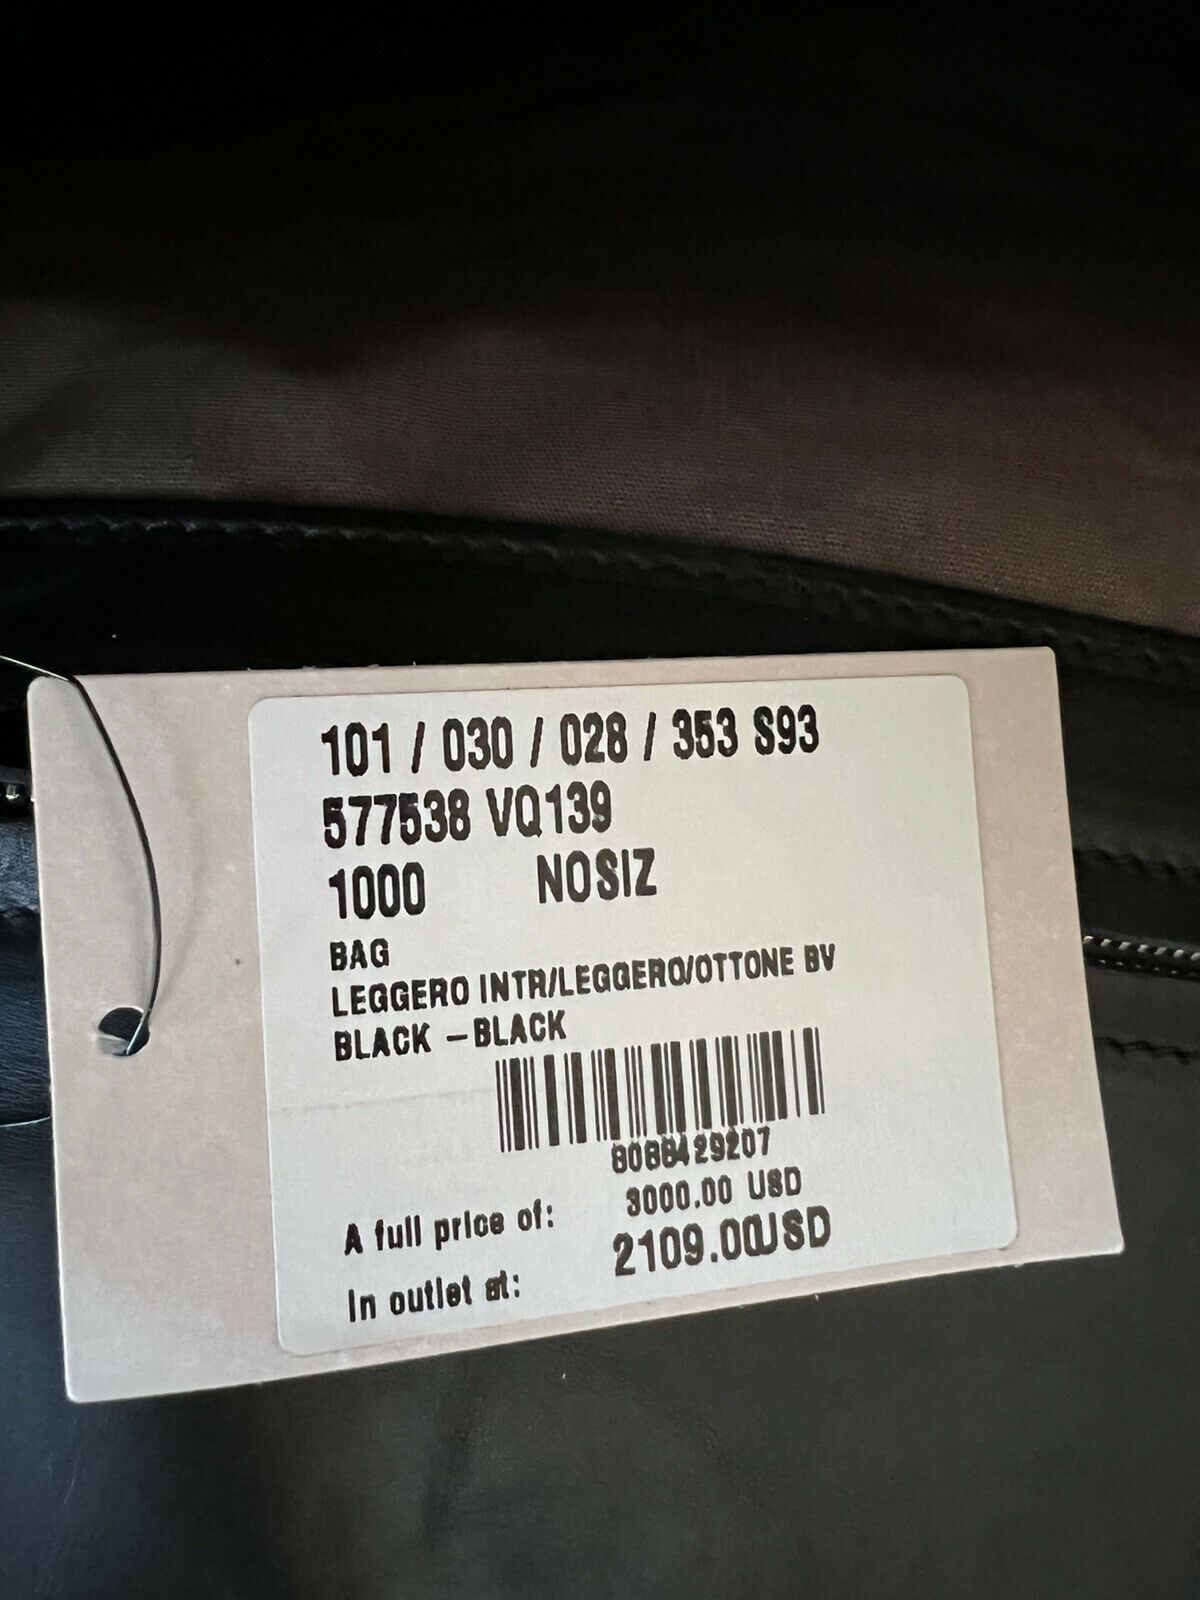 NWT $3000 Bottega Veneta Leather Intrecciato Black Crossbody Bag Italy 577538